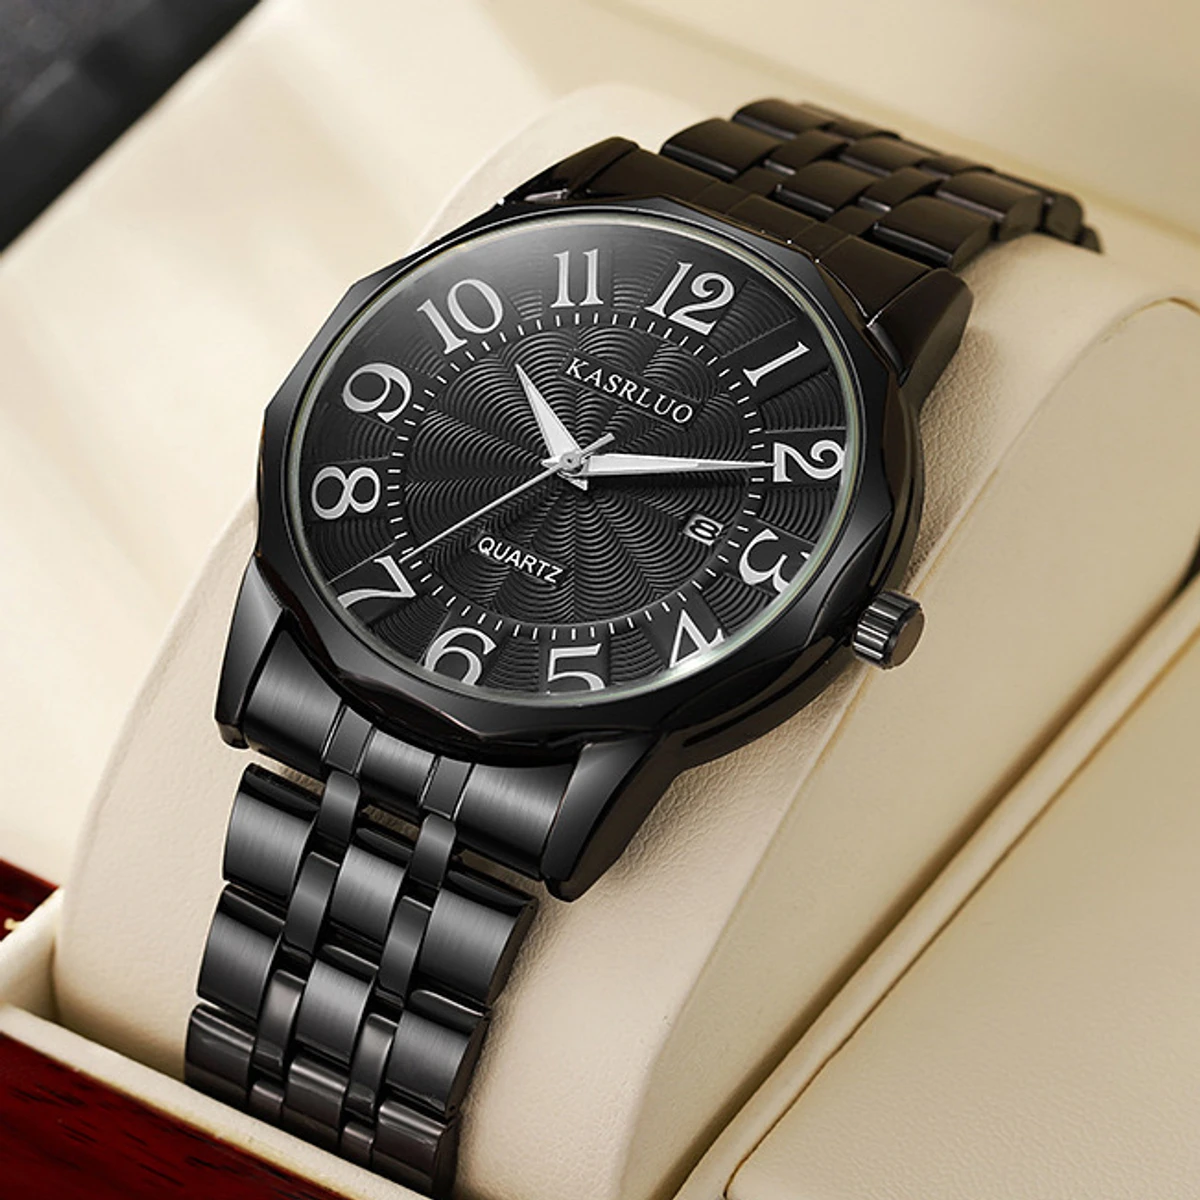 KASRLUO Popular New Fashion Quartz Watch for Men Stainless Steel Waterproof Luminous Date Mens Watches Top Brand Luxury Clock- Black